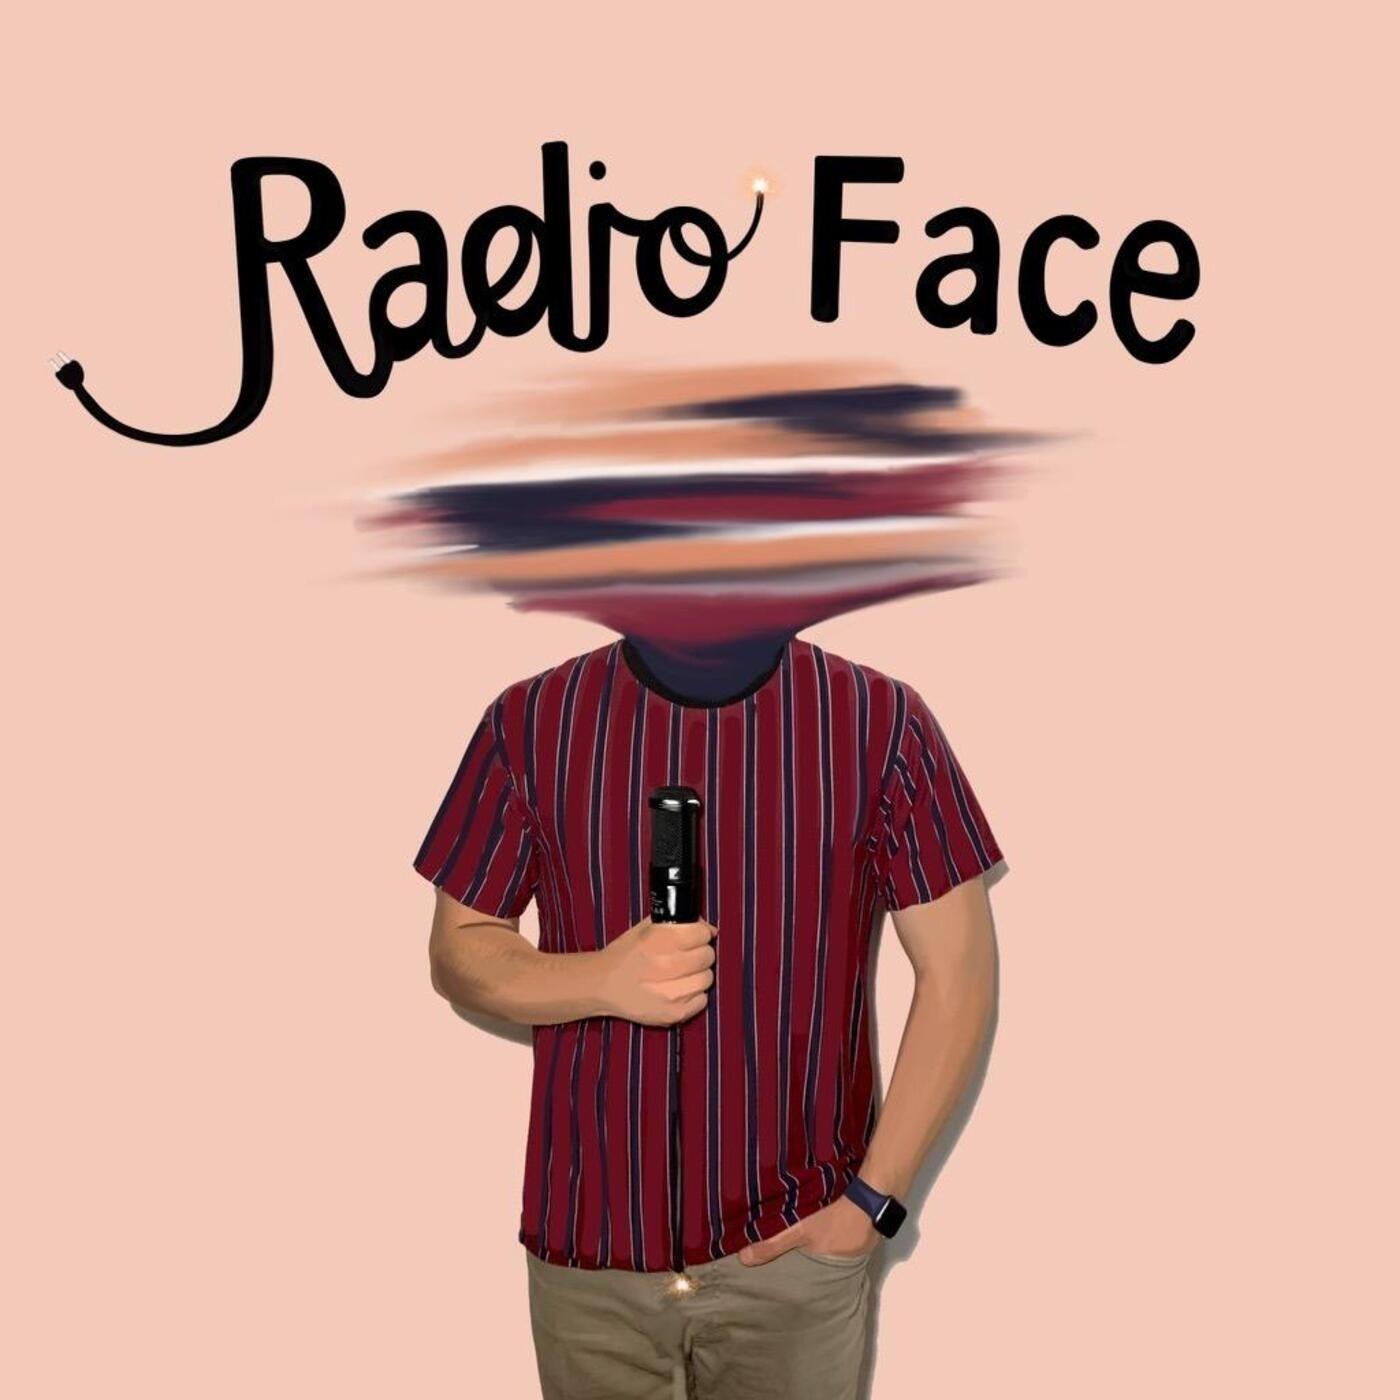 Radio Face